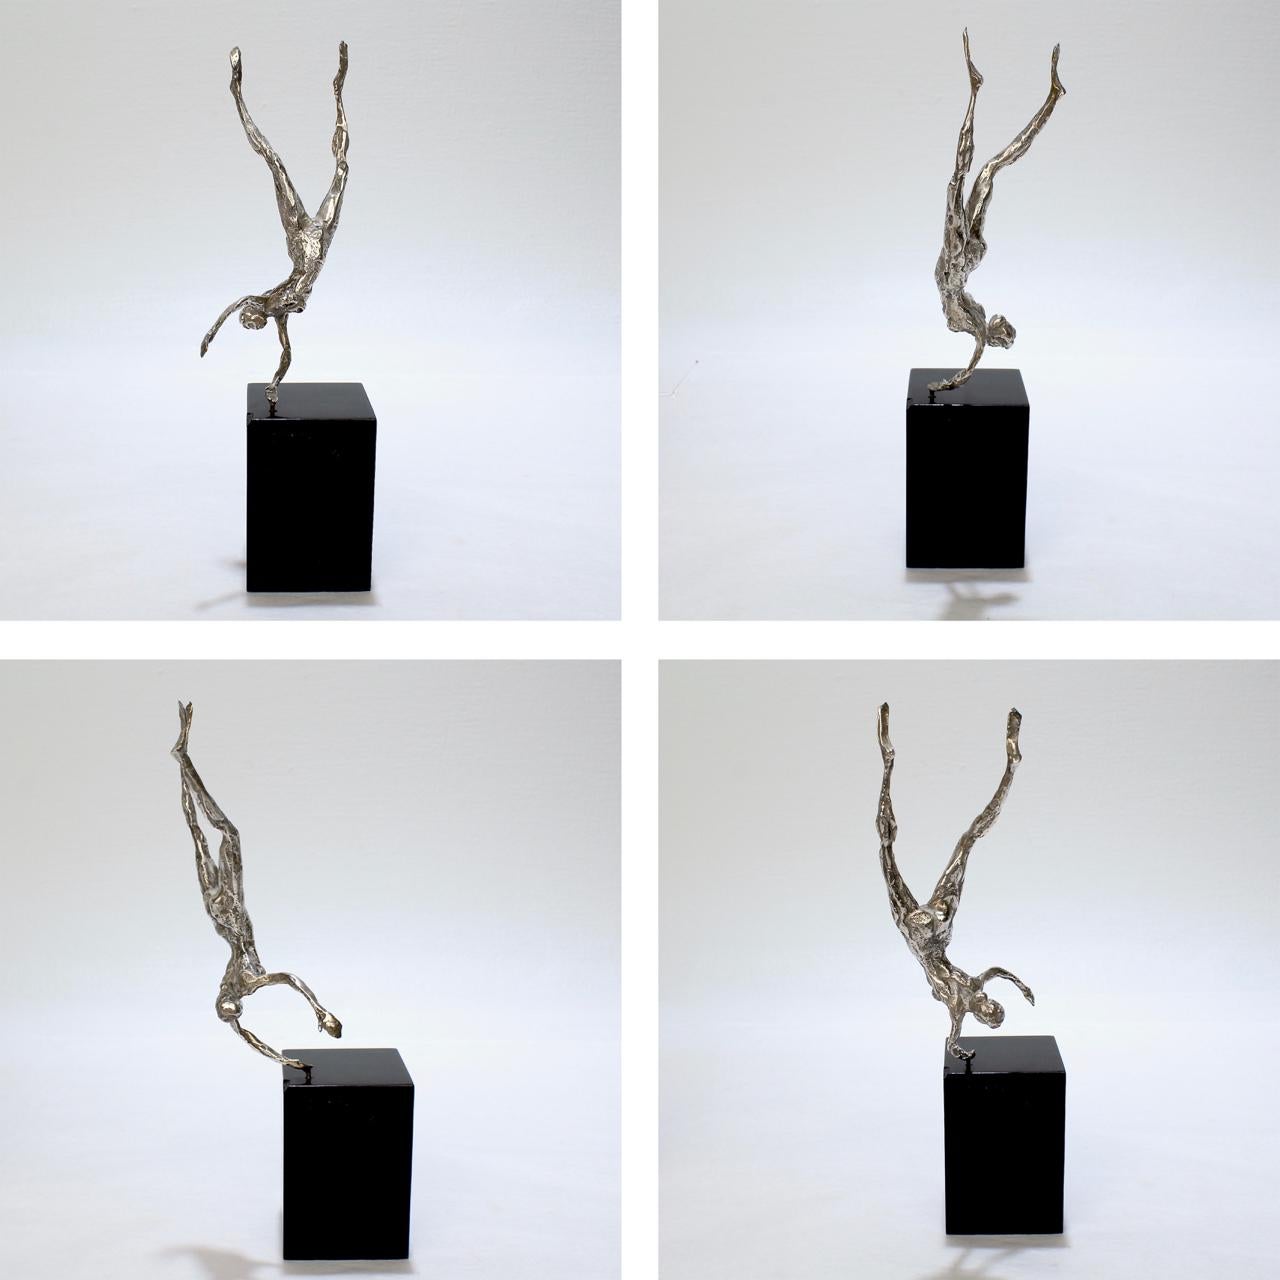 2 Stanley Bleifeld 800 Silver Sculptures Depicting Adam & Eve's Fall from Grace 3